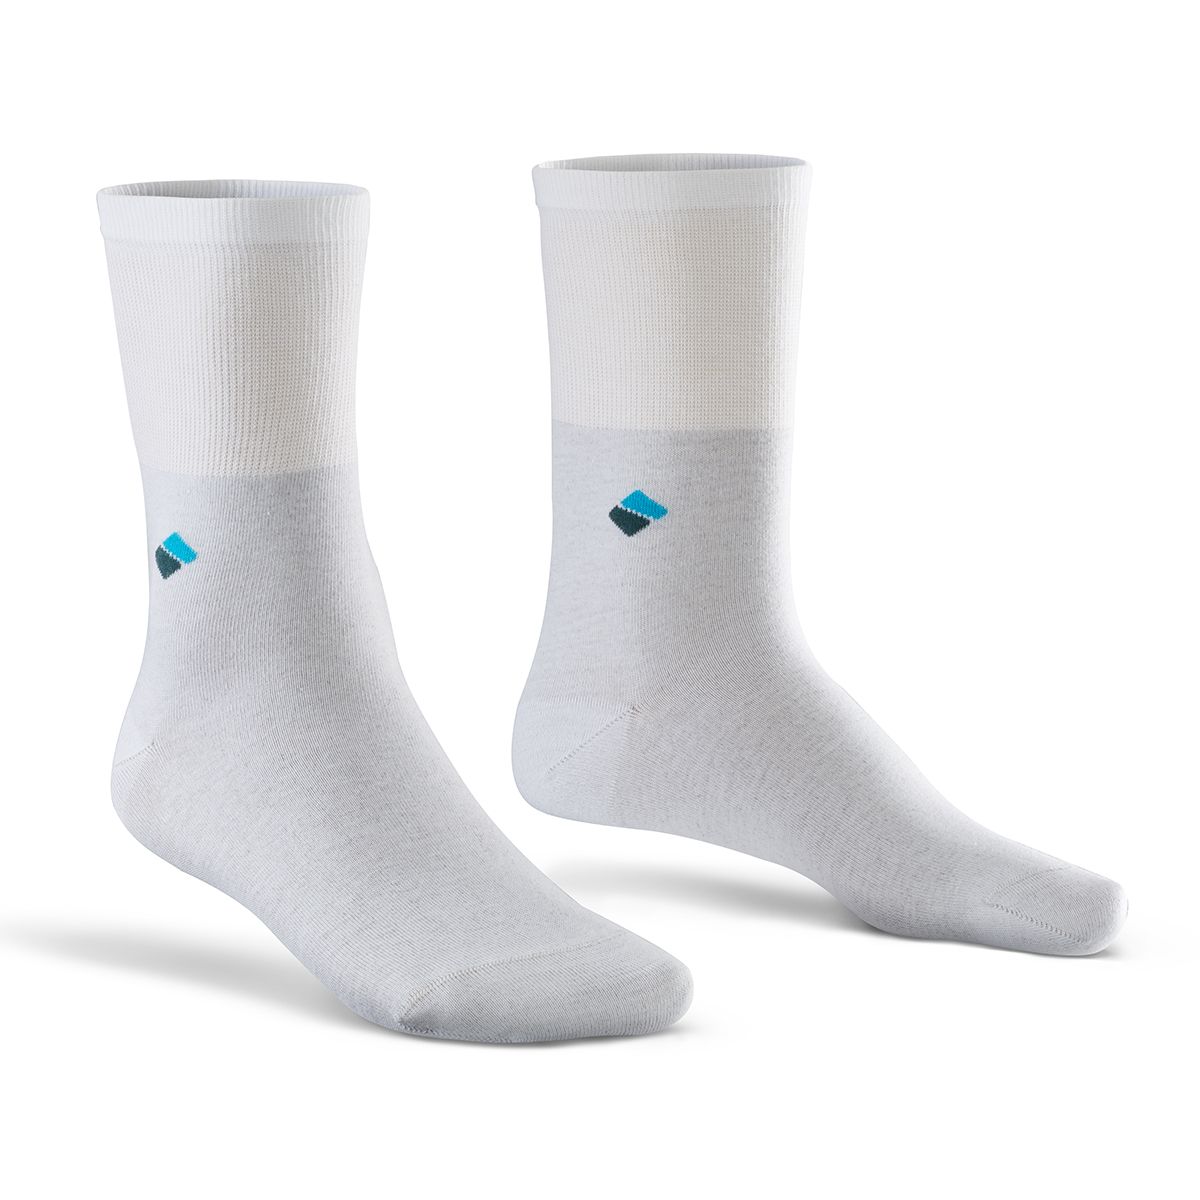 bonnysilver diabetic silver socks in white double socks